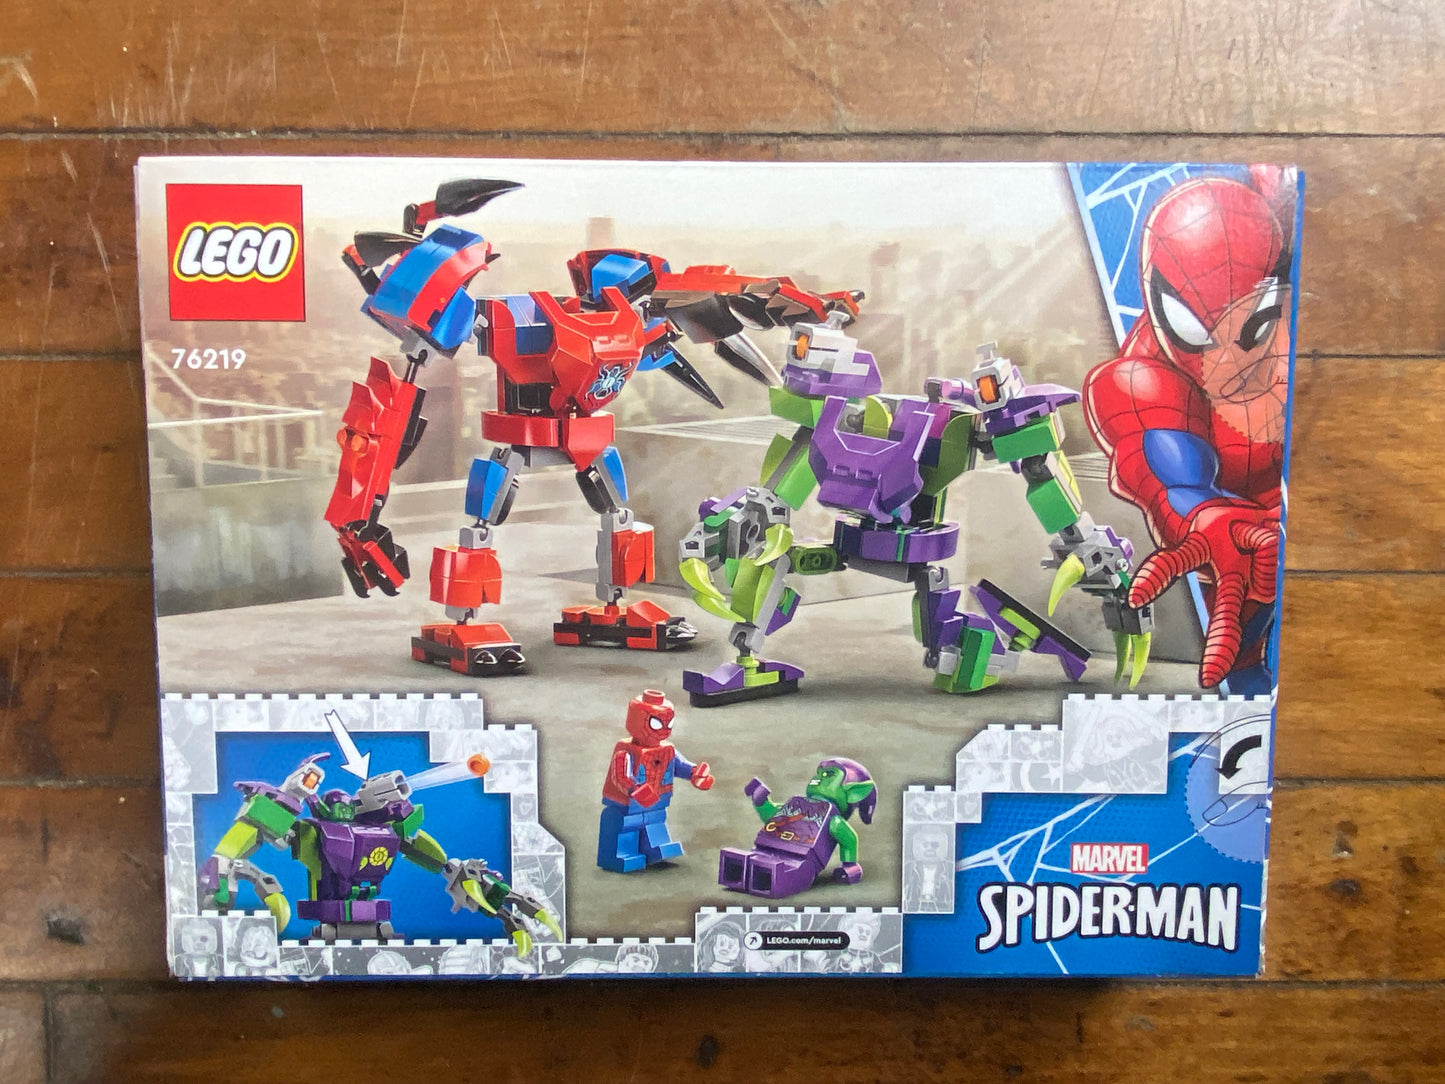 LEGO Marvel Spider-Man - Spider-Man & Green Goblin Mech Battle Set